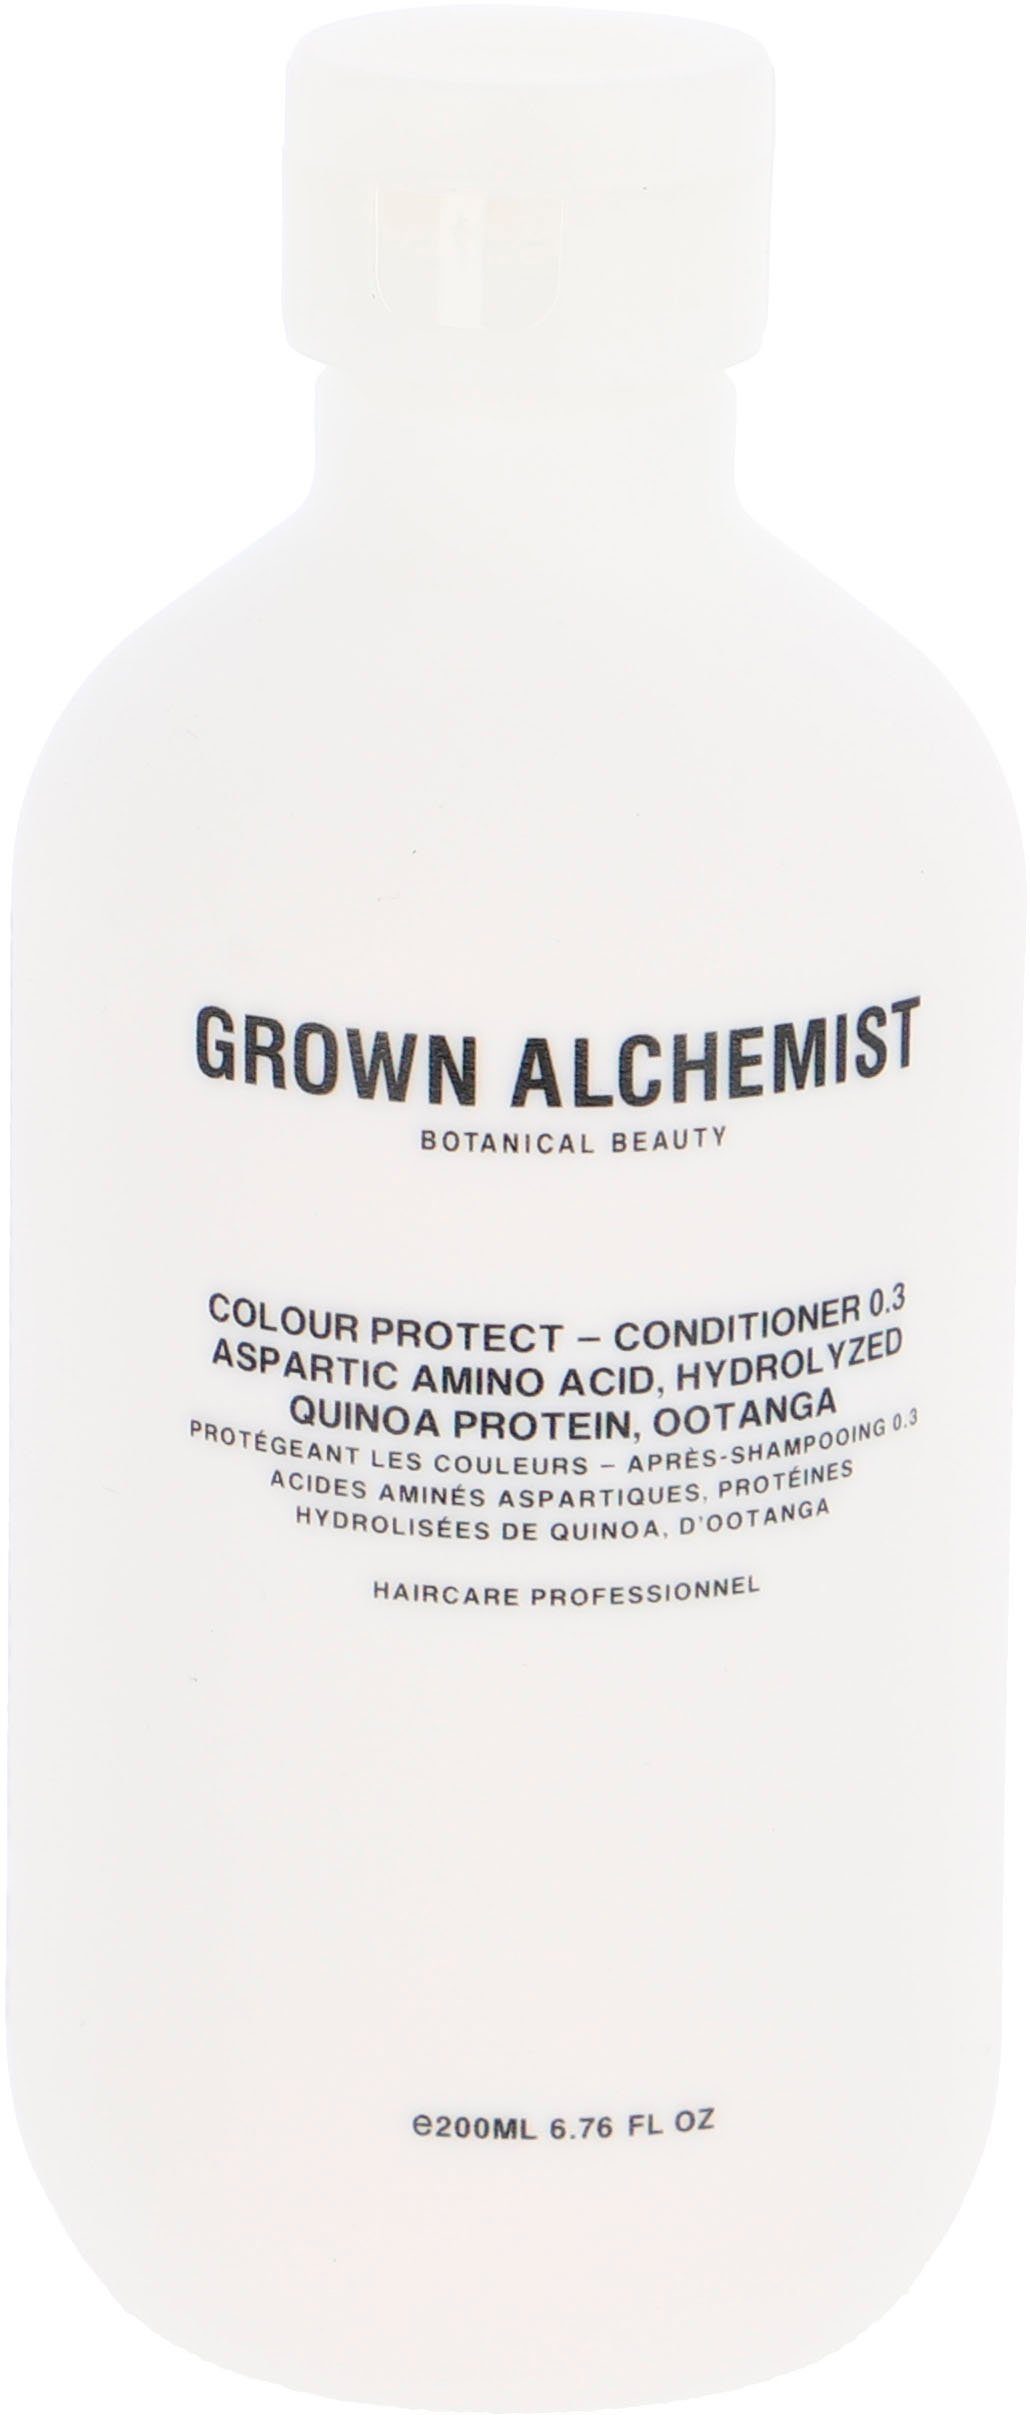 Colour Conditioner 0.3, Aspartic Haarspülung Hydrolyzed Protect Quinoa GROWN Amino Ootanga - Protein, Acid, ALCHEMIST